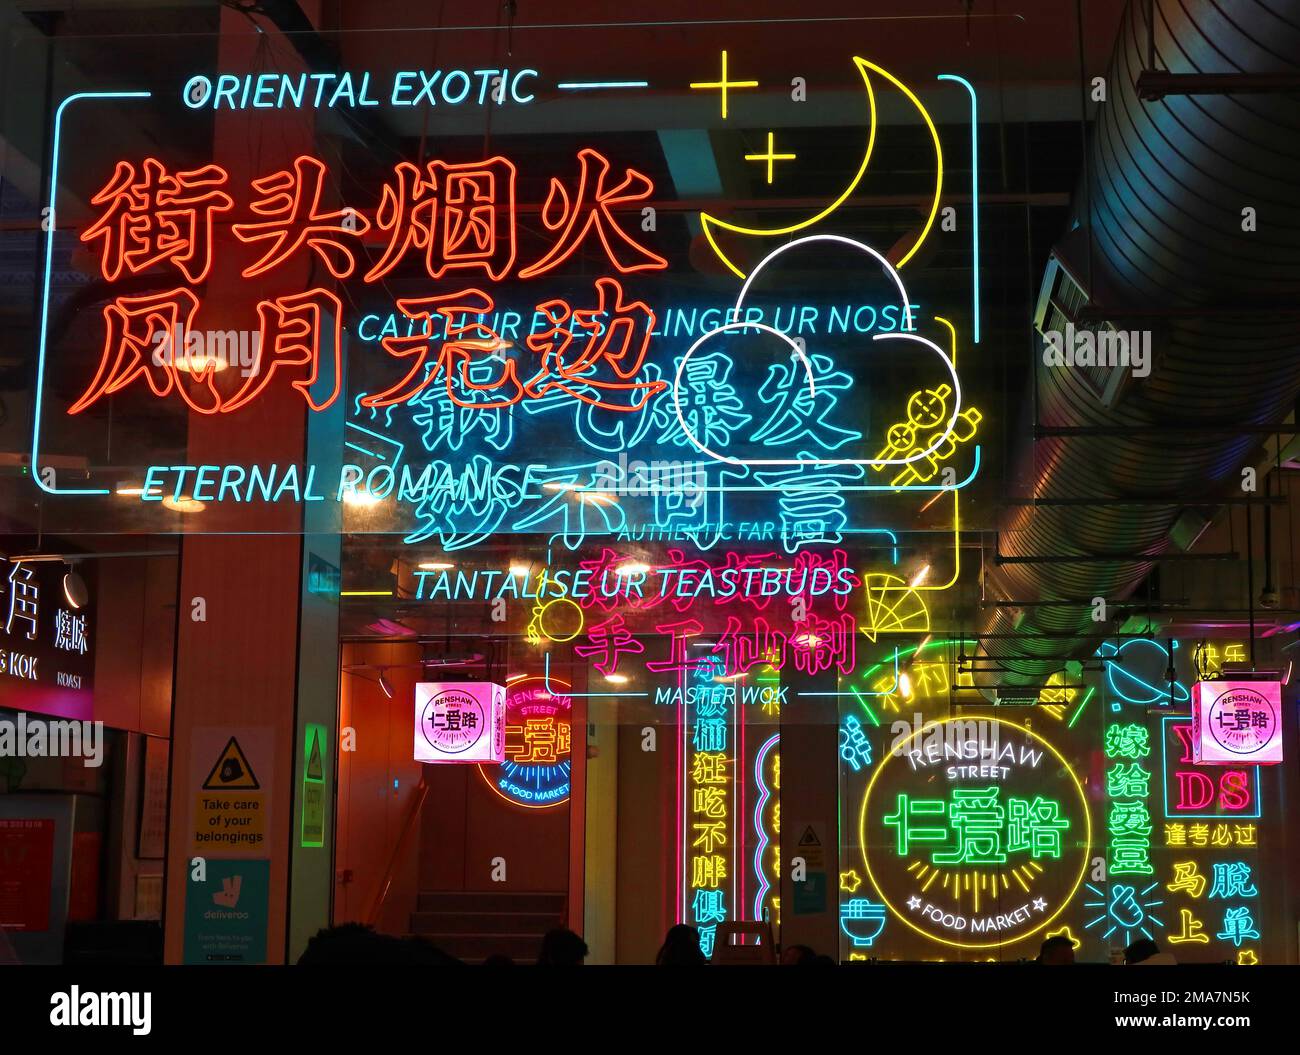 Oriental exotic Food Market neon, 85-97 Renshaw Street, Liverpool, Merseyside, England, UK, L1 2SP- Asian-themed food hall Stock Photo